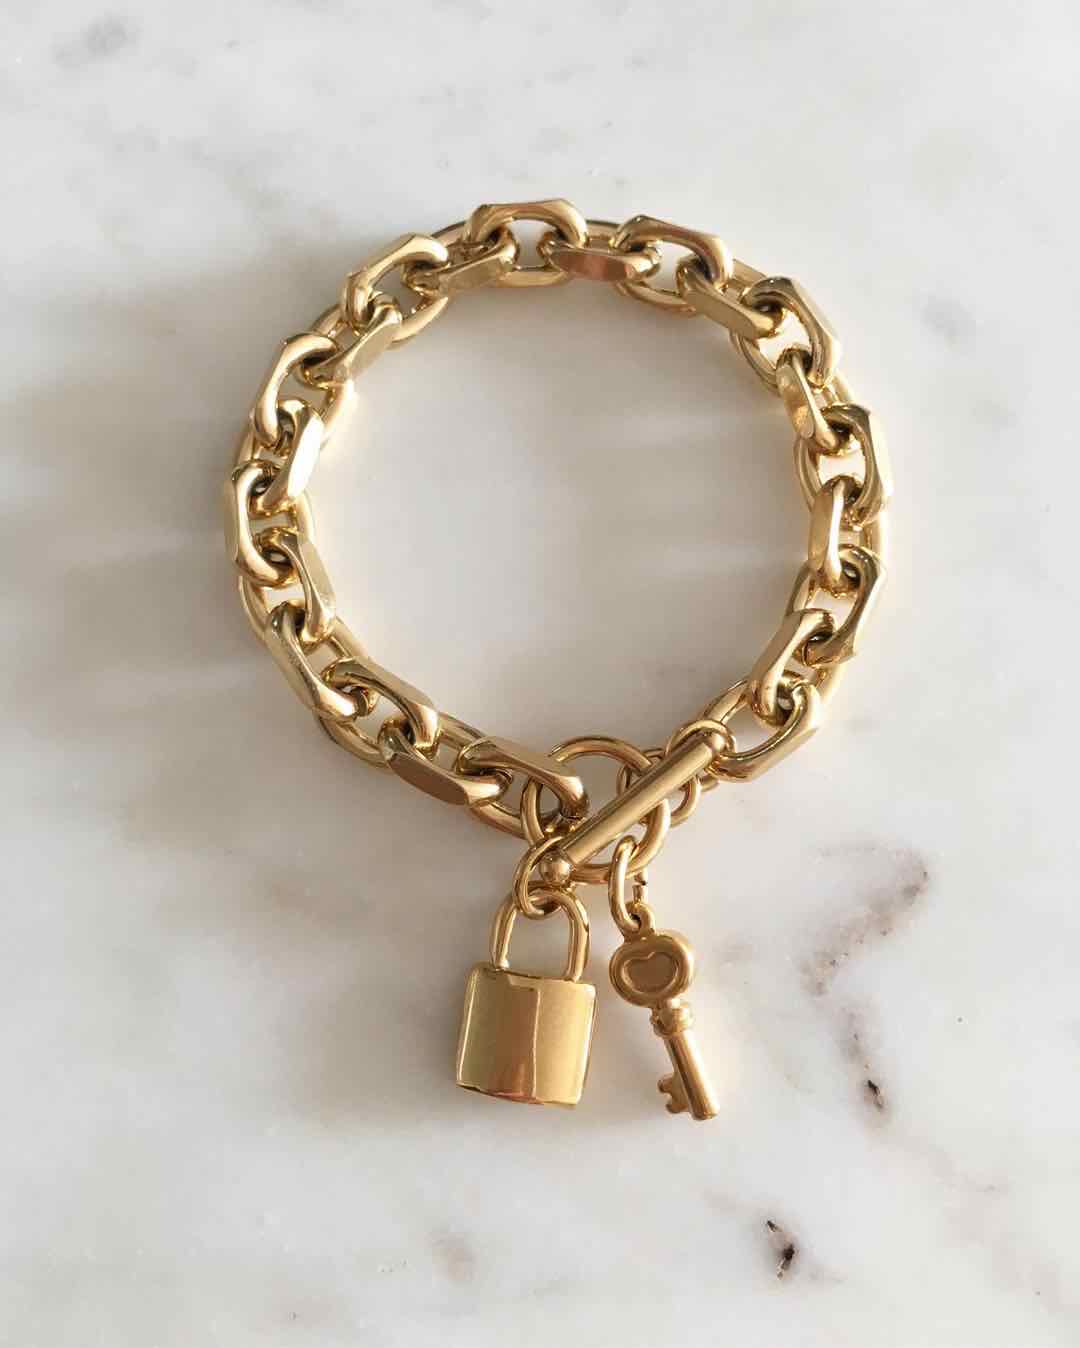 Zoe chain with lock and key charm